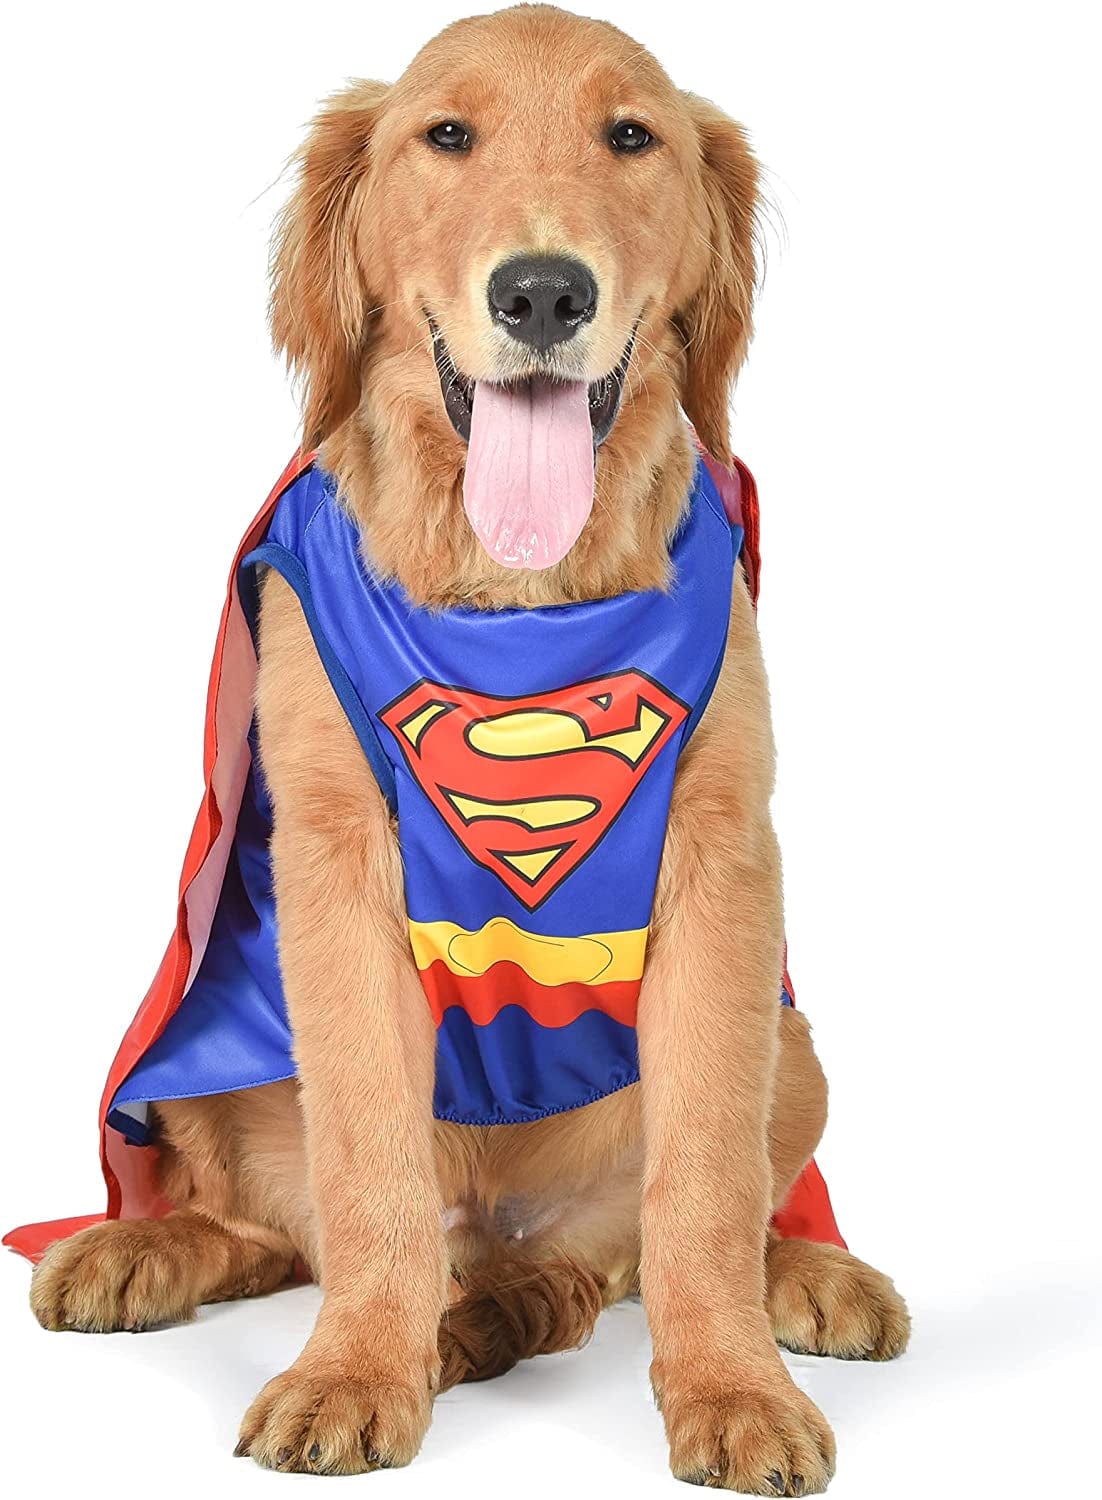 DC Superhero Superman Halloween Dog Costume - Small 